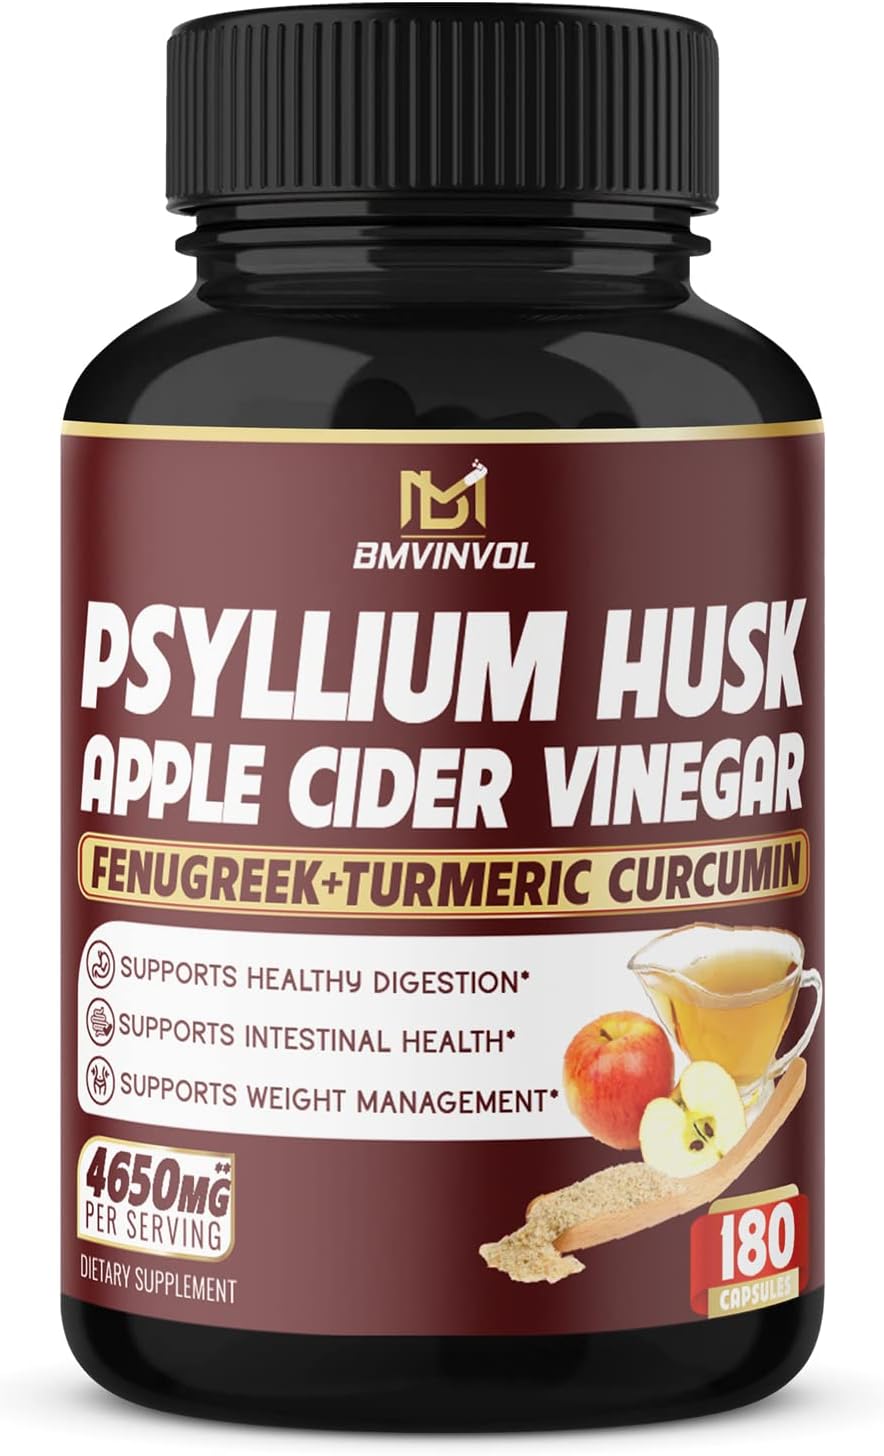 BMVINVOL Psyllium Husk Fiber Supplement 4650mg - Apple Cider Vinegar, Fenugreek - Supports Weight Management and Digestive Regularity - 3 Months Supply